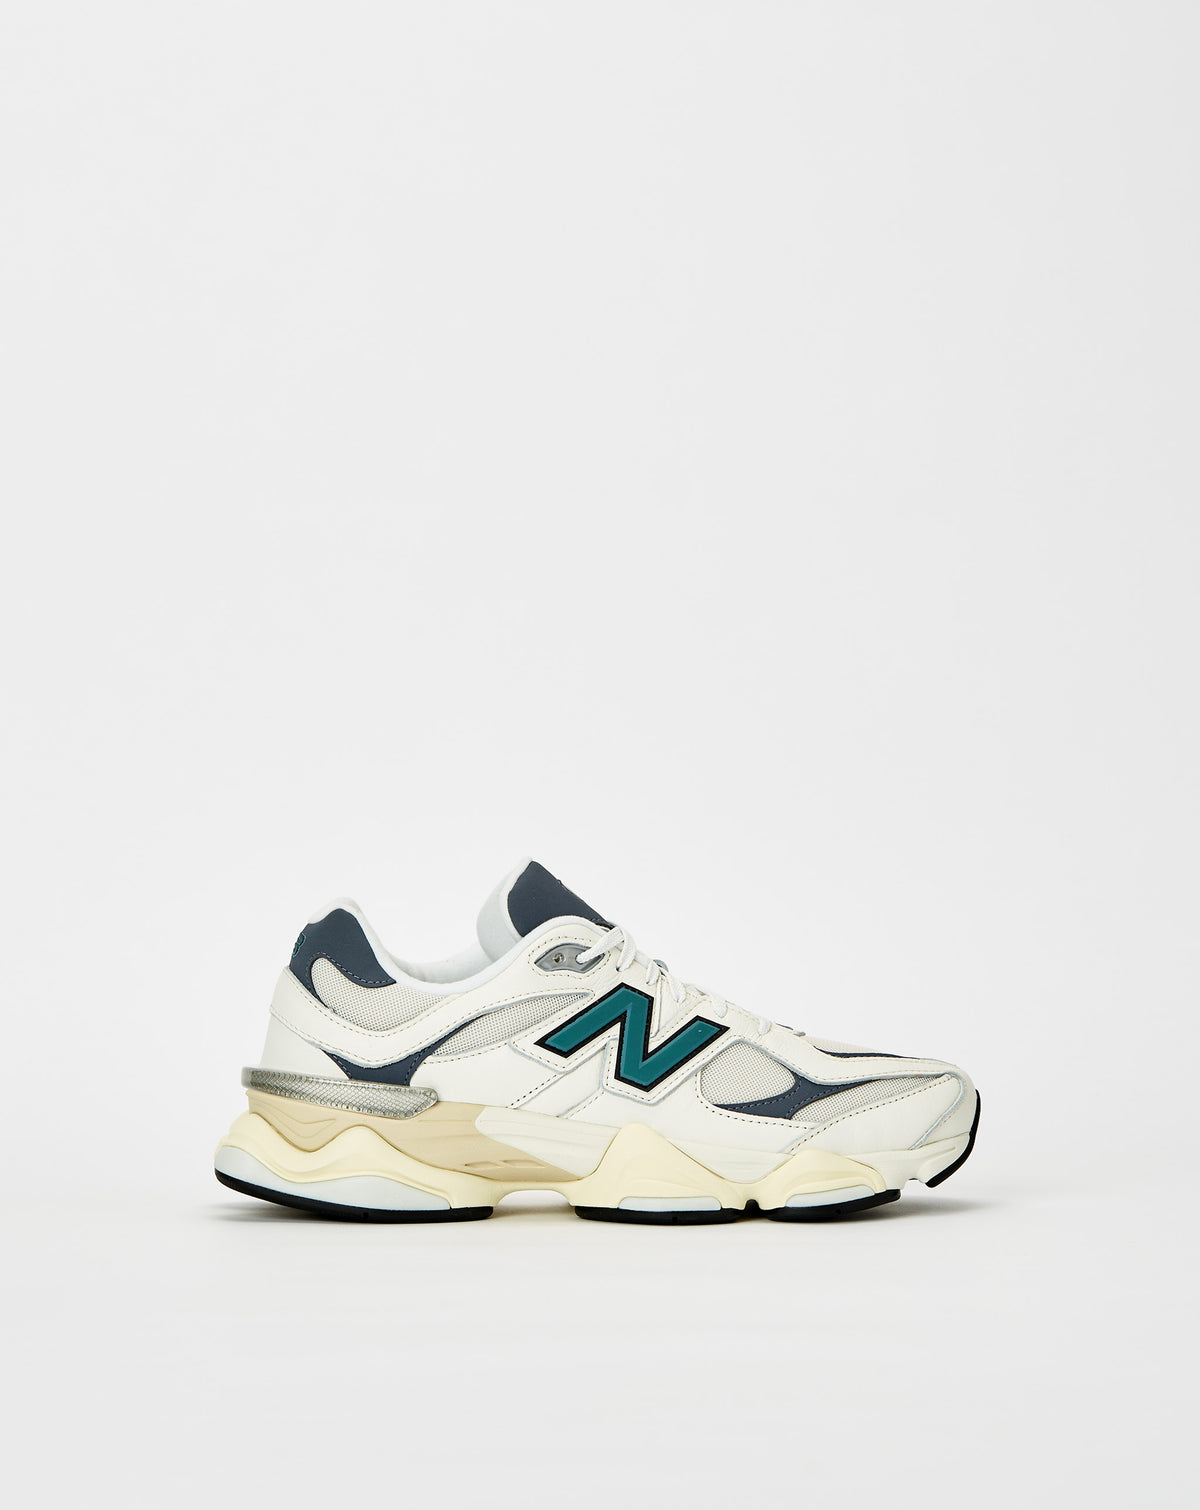 New Balance 9060 - Rule of Next Footwear